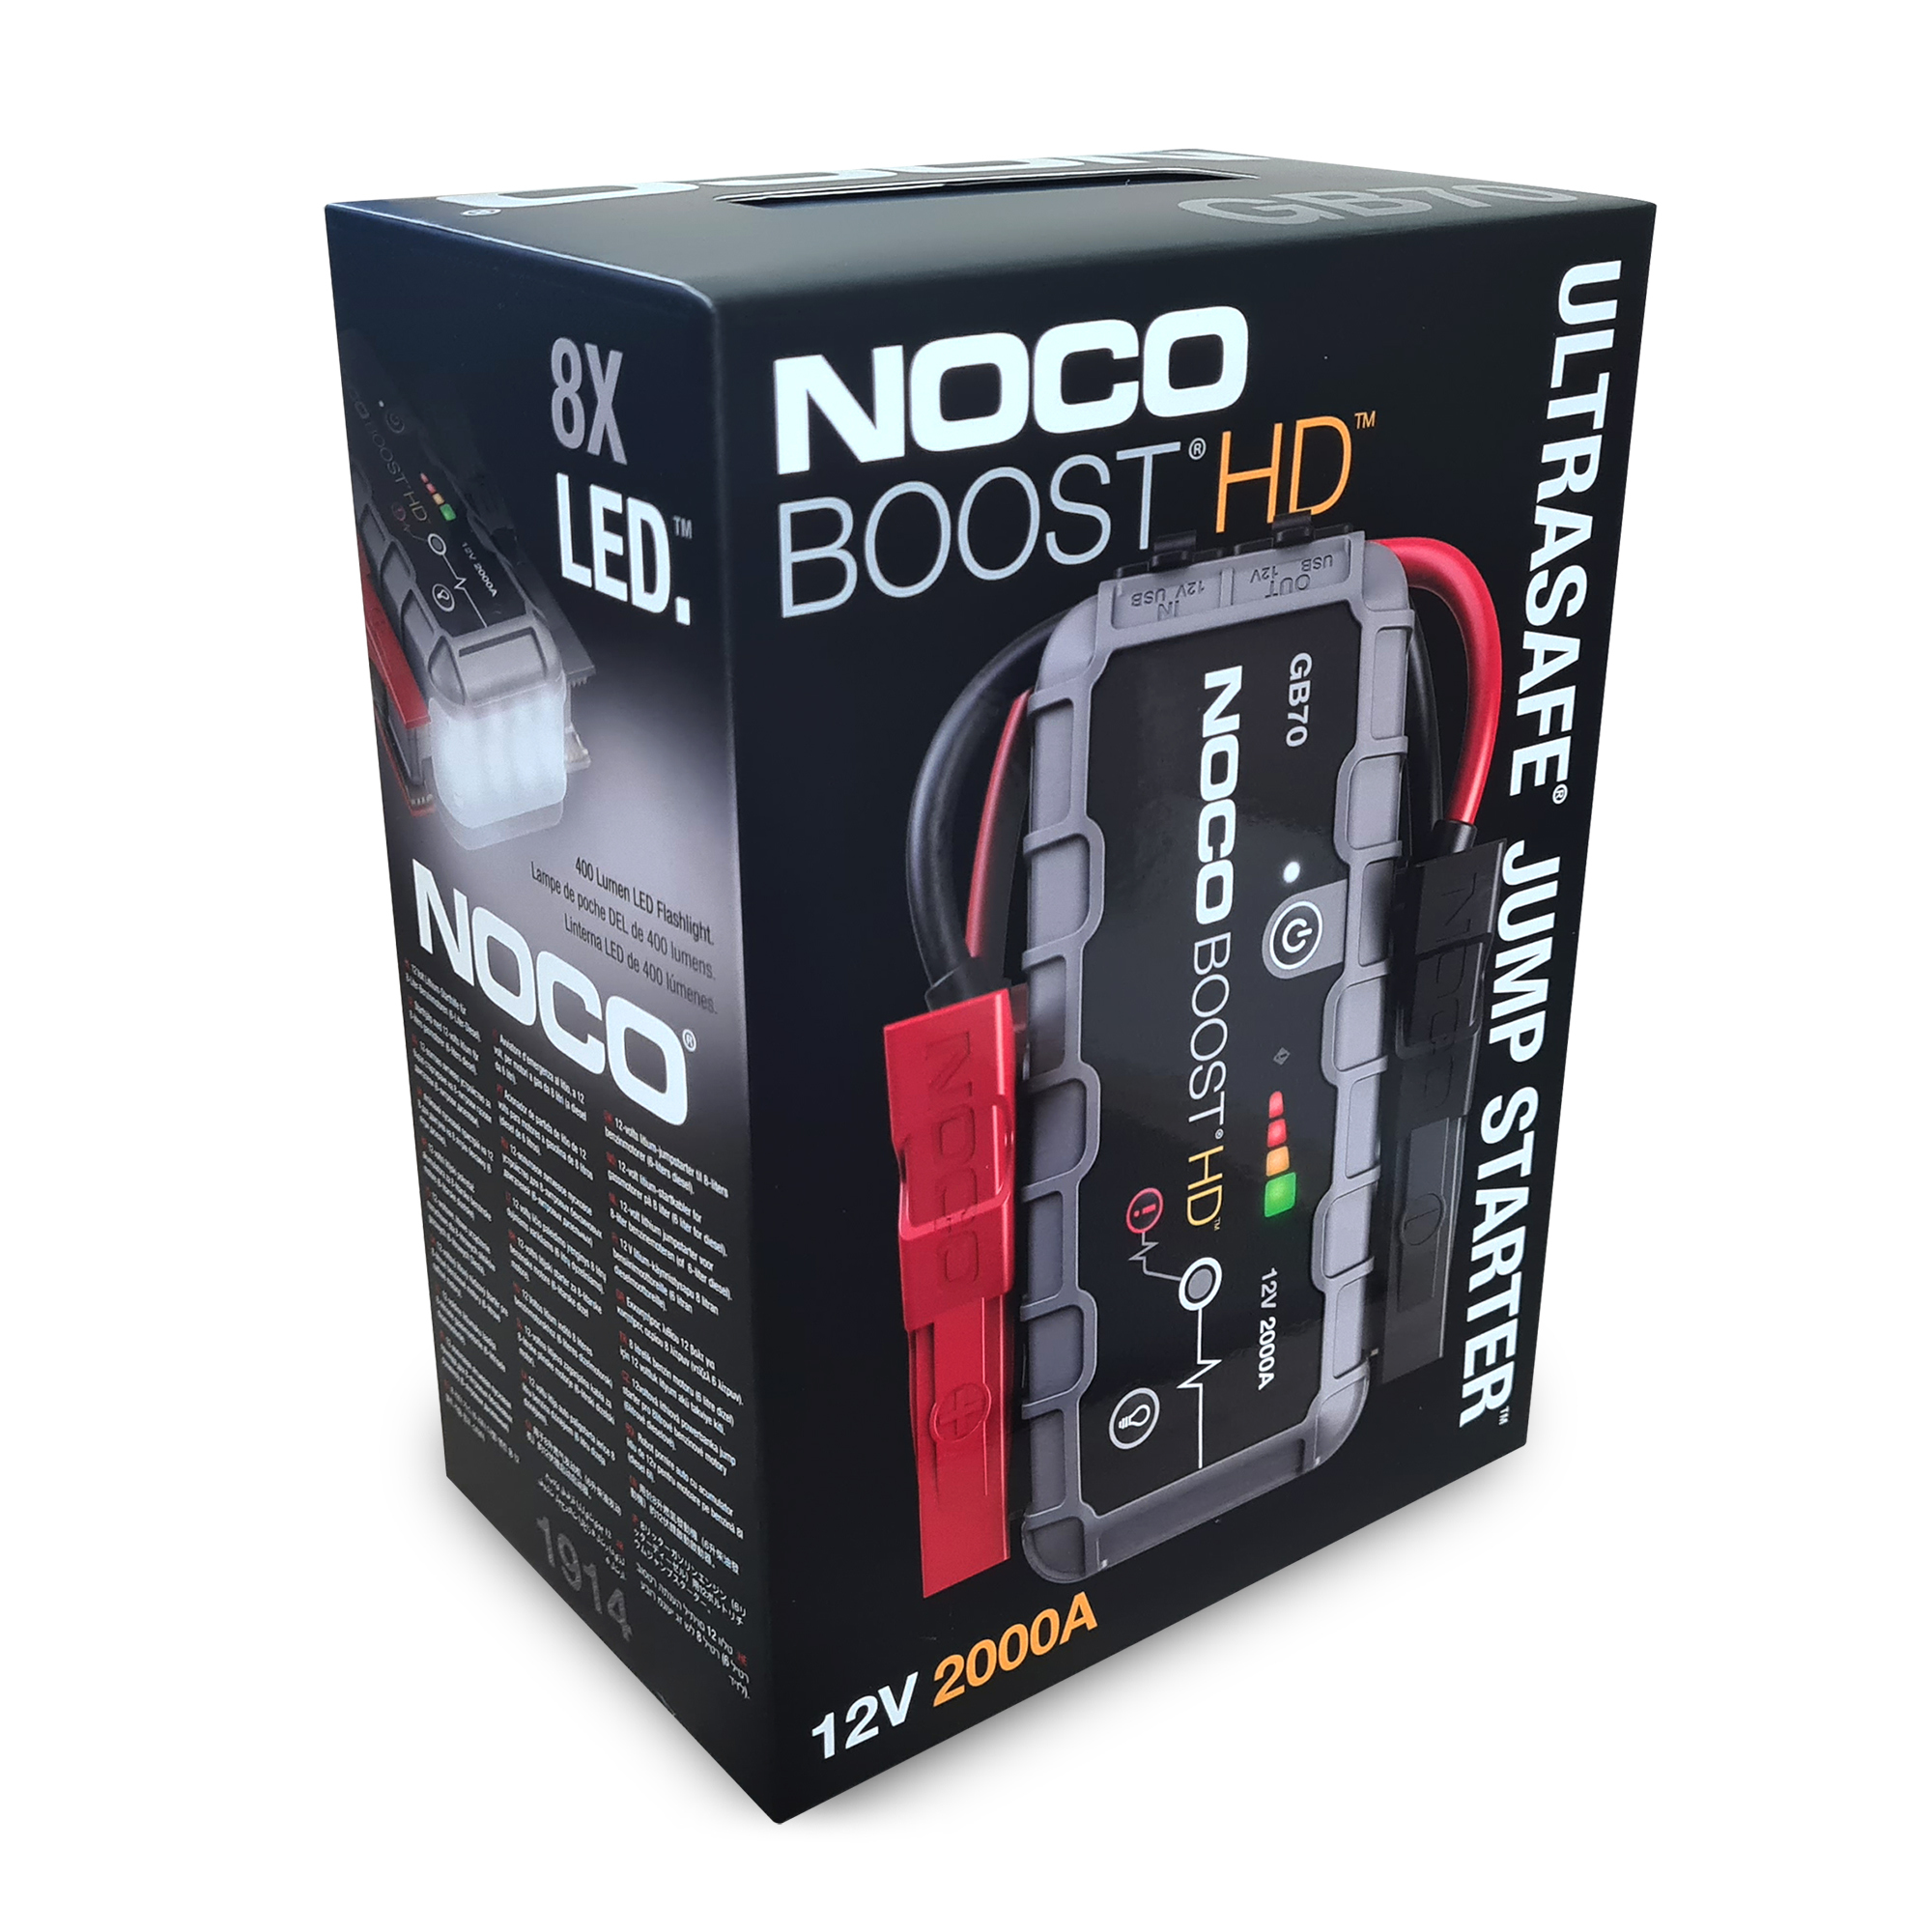 Noco Gb70 Genius Boost Hd - 2000a Ultrasafe Jump Starter